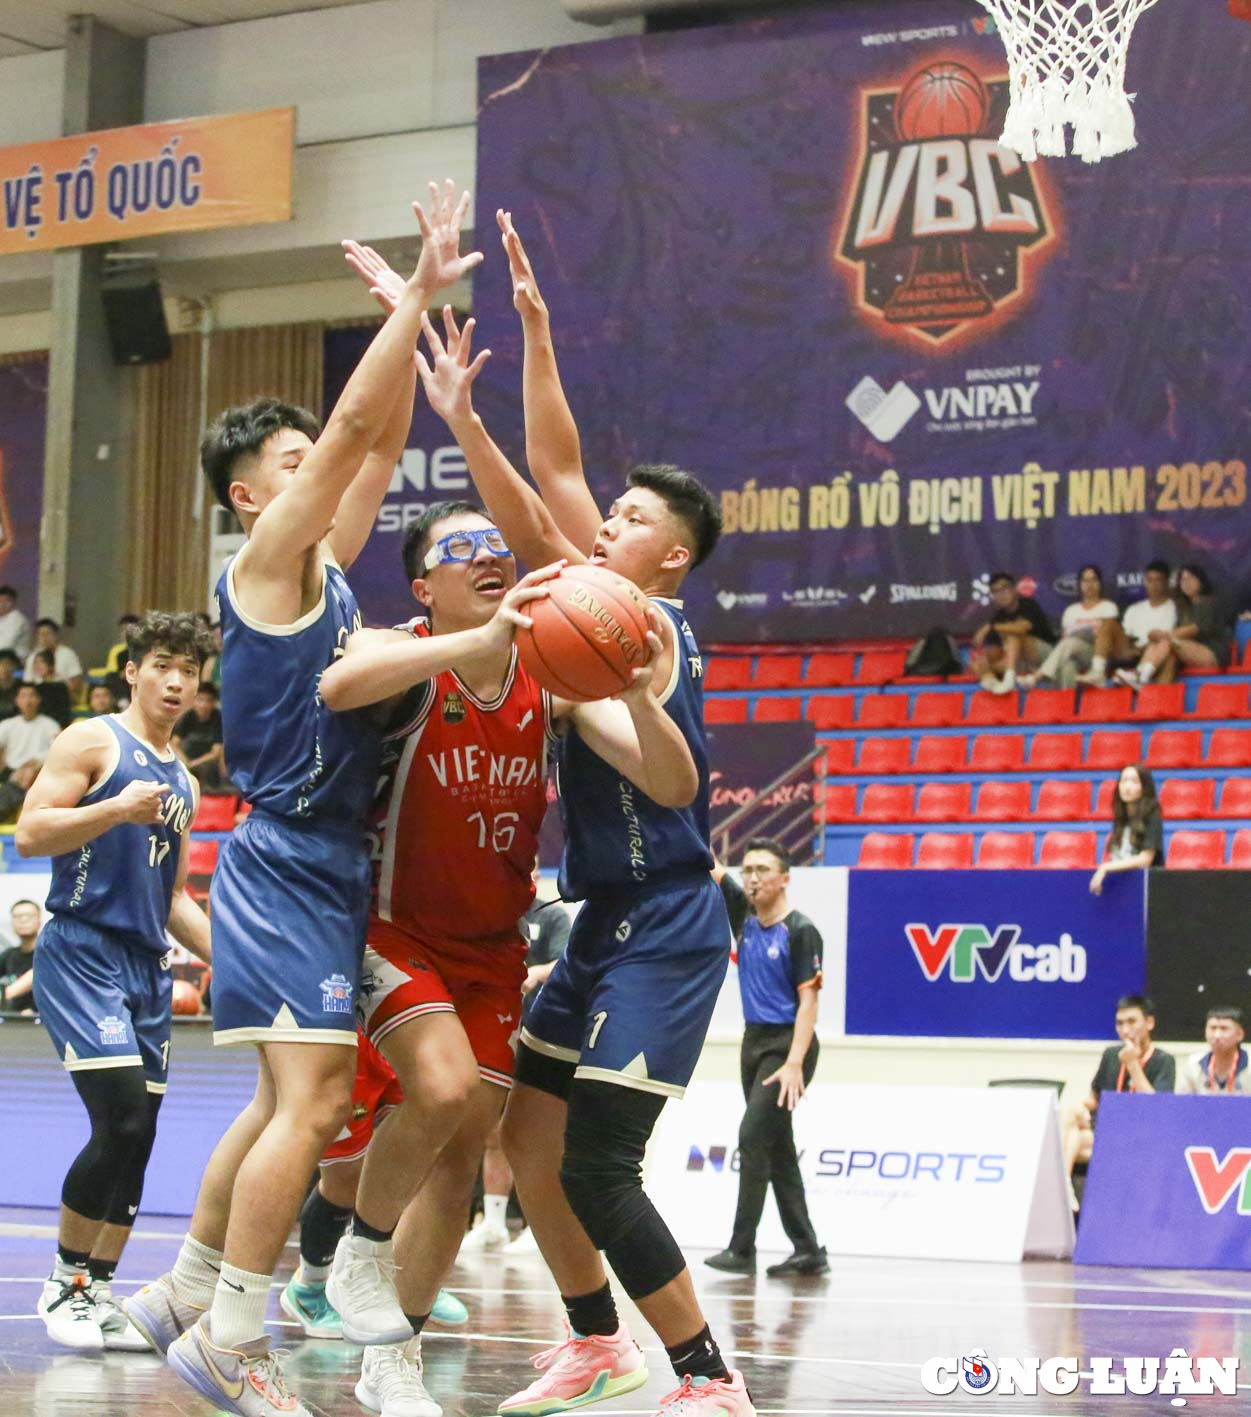 man nhan voi giai bong ro vietnam pro am basketball championship 2023 hinh 5